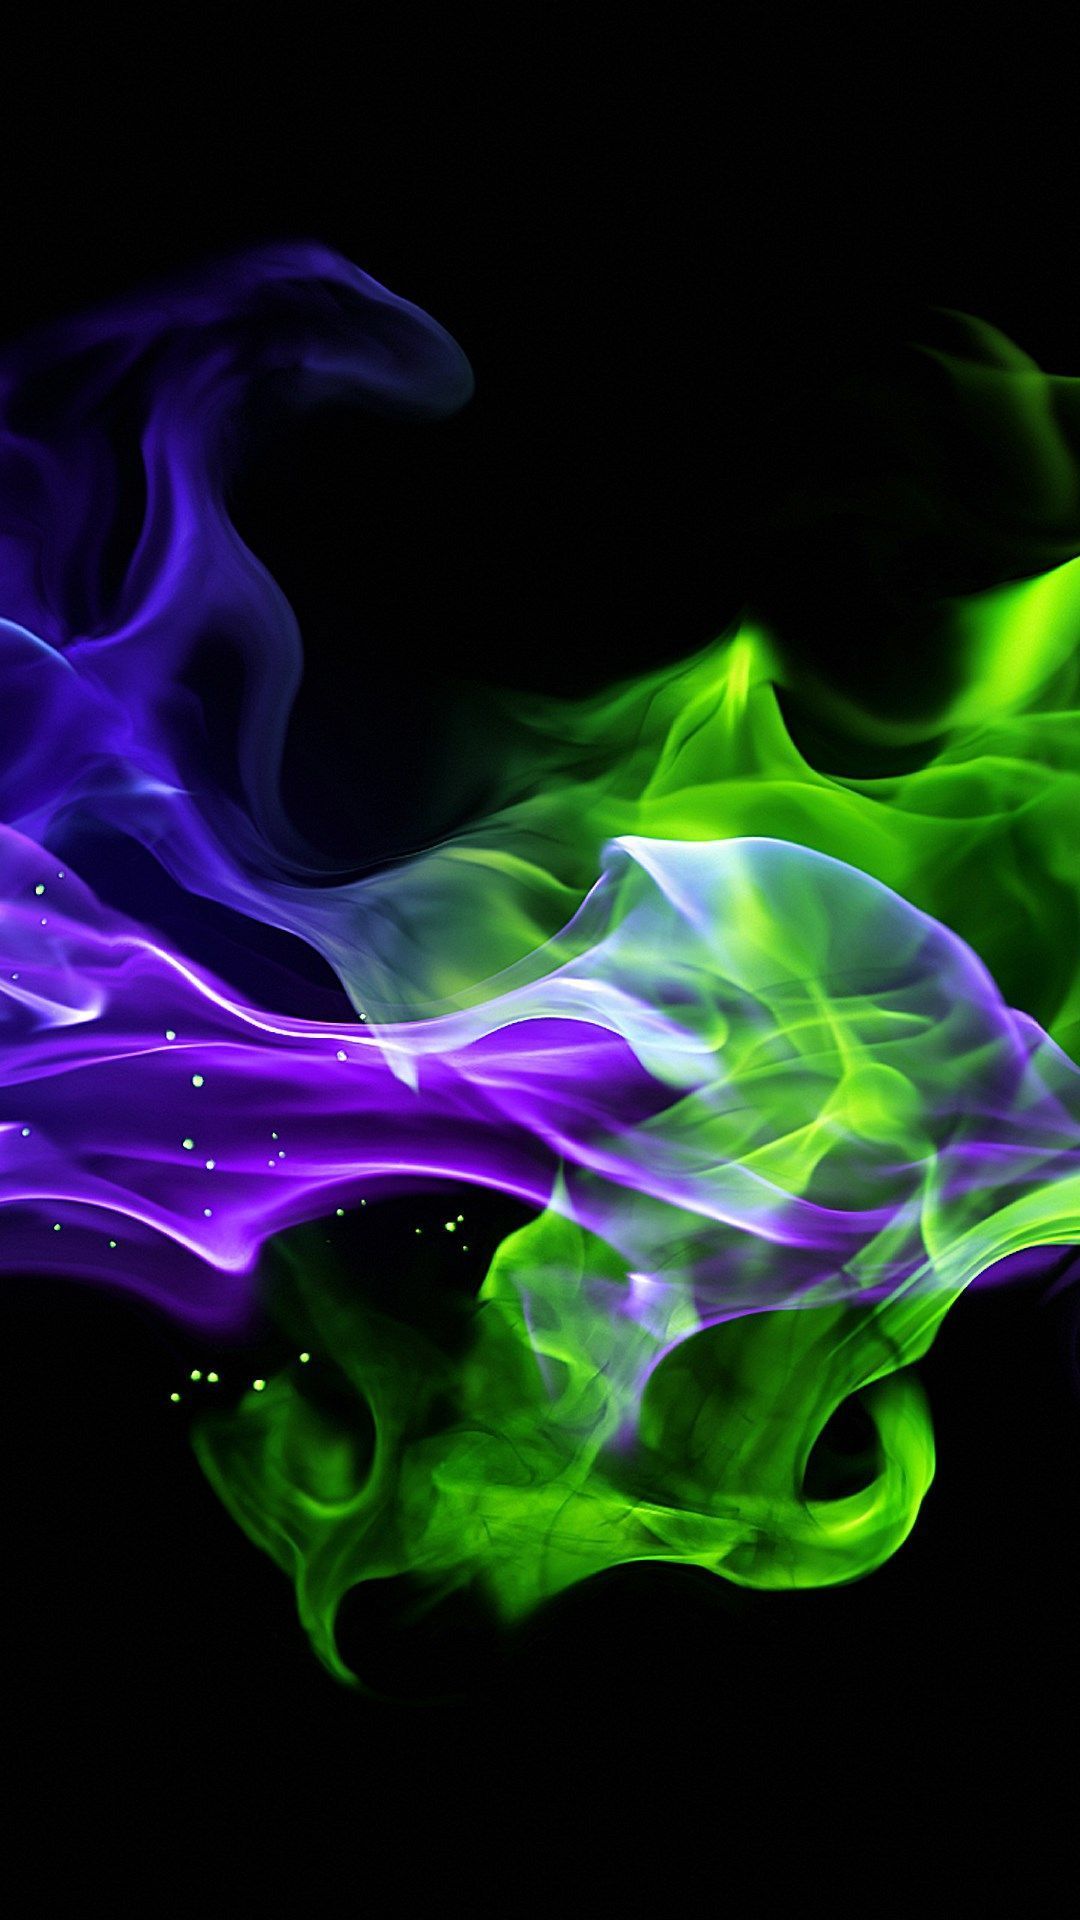 Aesthetic Purple And Green Image. Green wallpaper, Cool desktop background, Cool desktop wallpaper